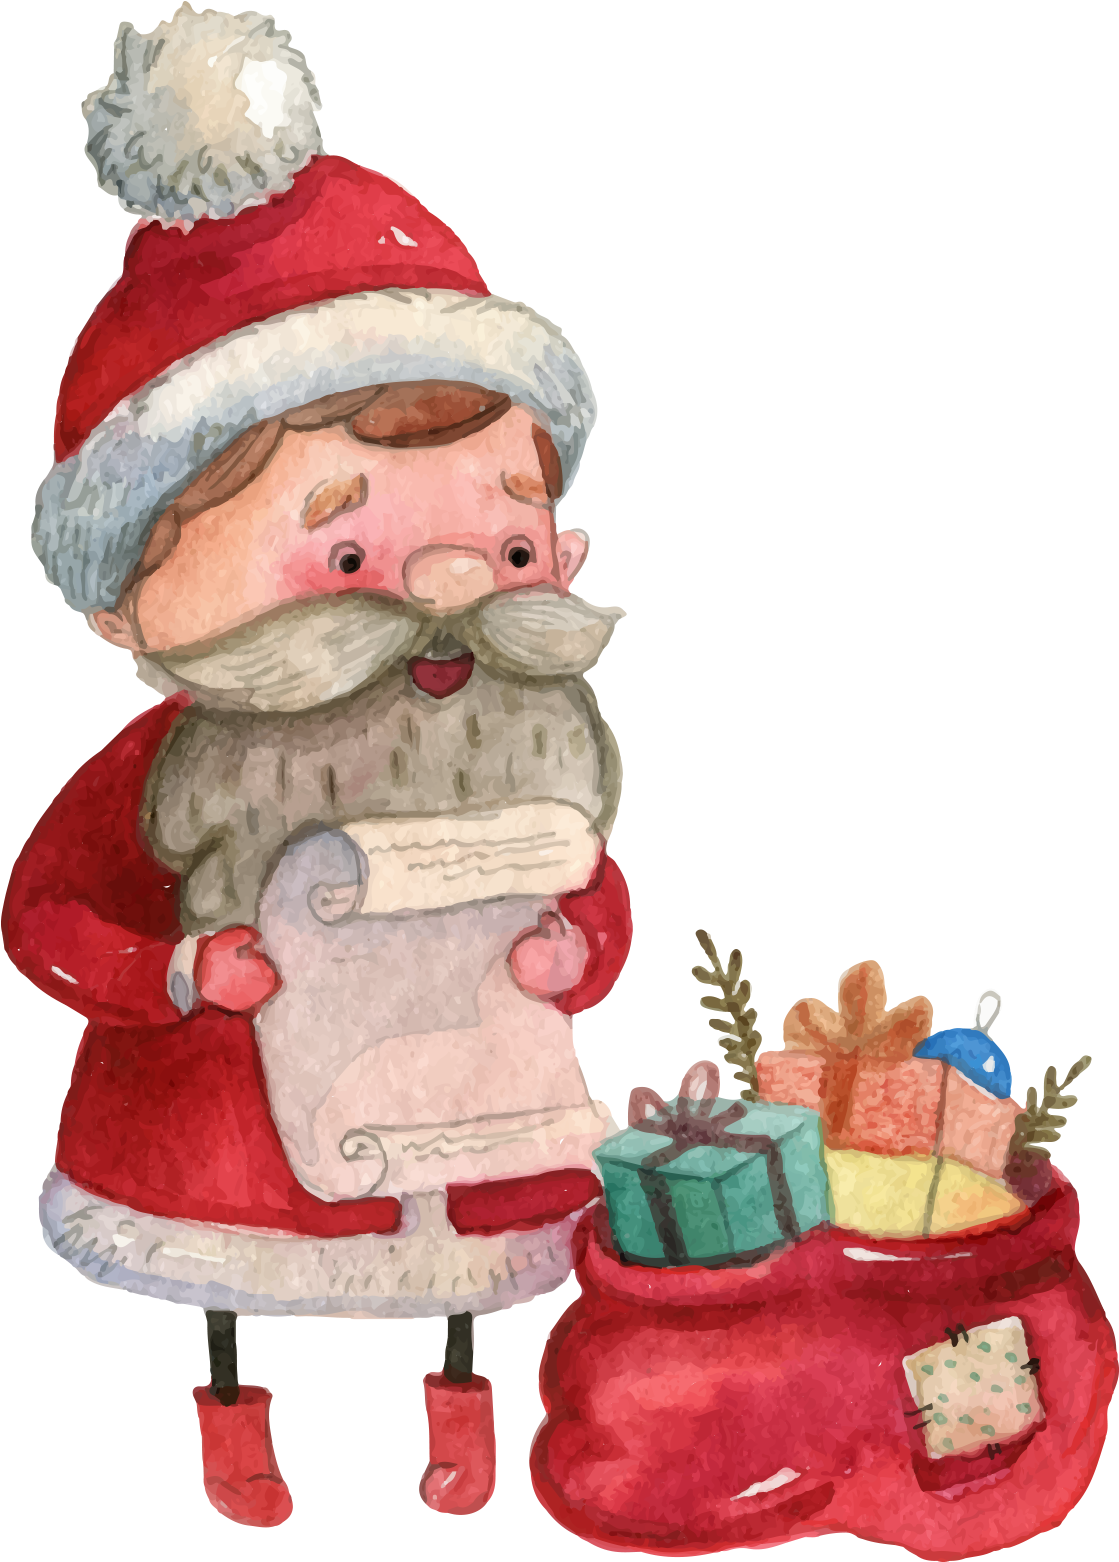 A Cartoon Of A Santa Claus Holding A Paper